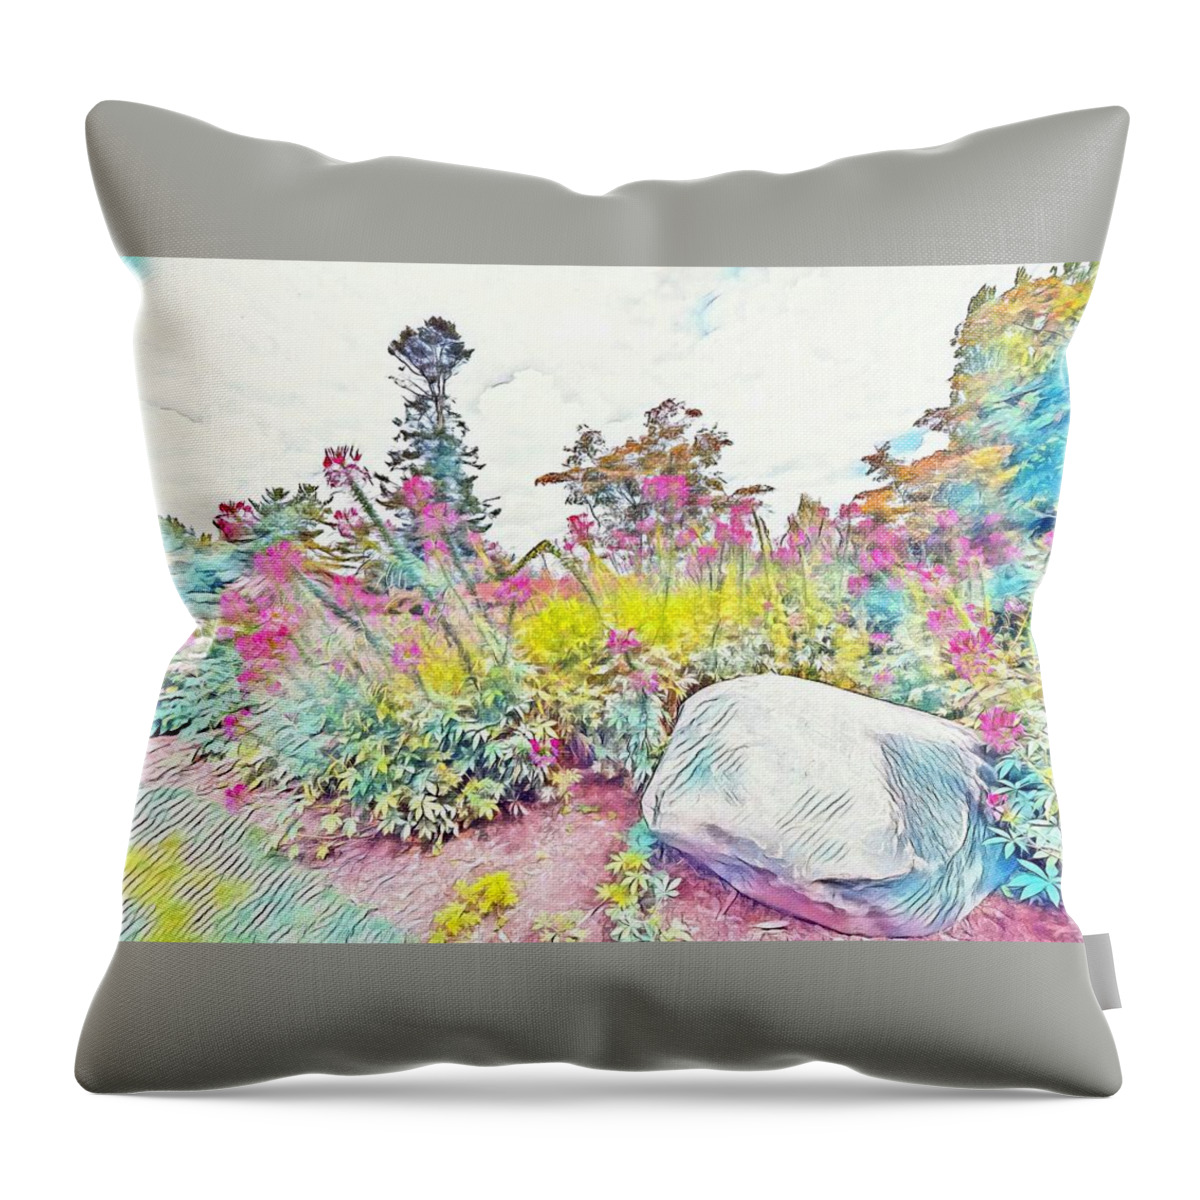 Flowers Throw Pillow featuring the digital art The Flower Garden by Jerry Cahill